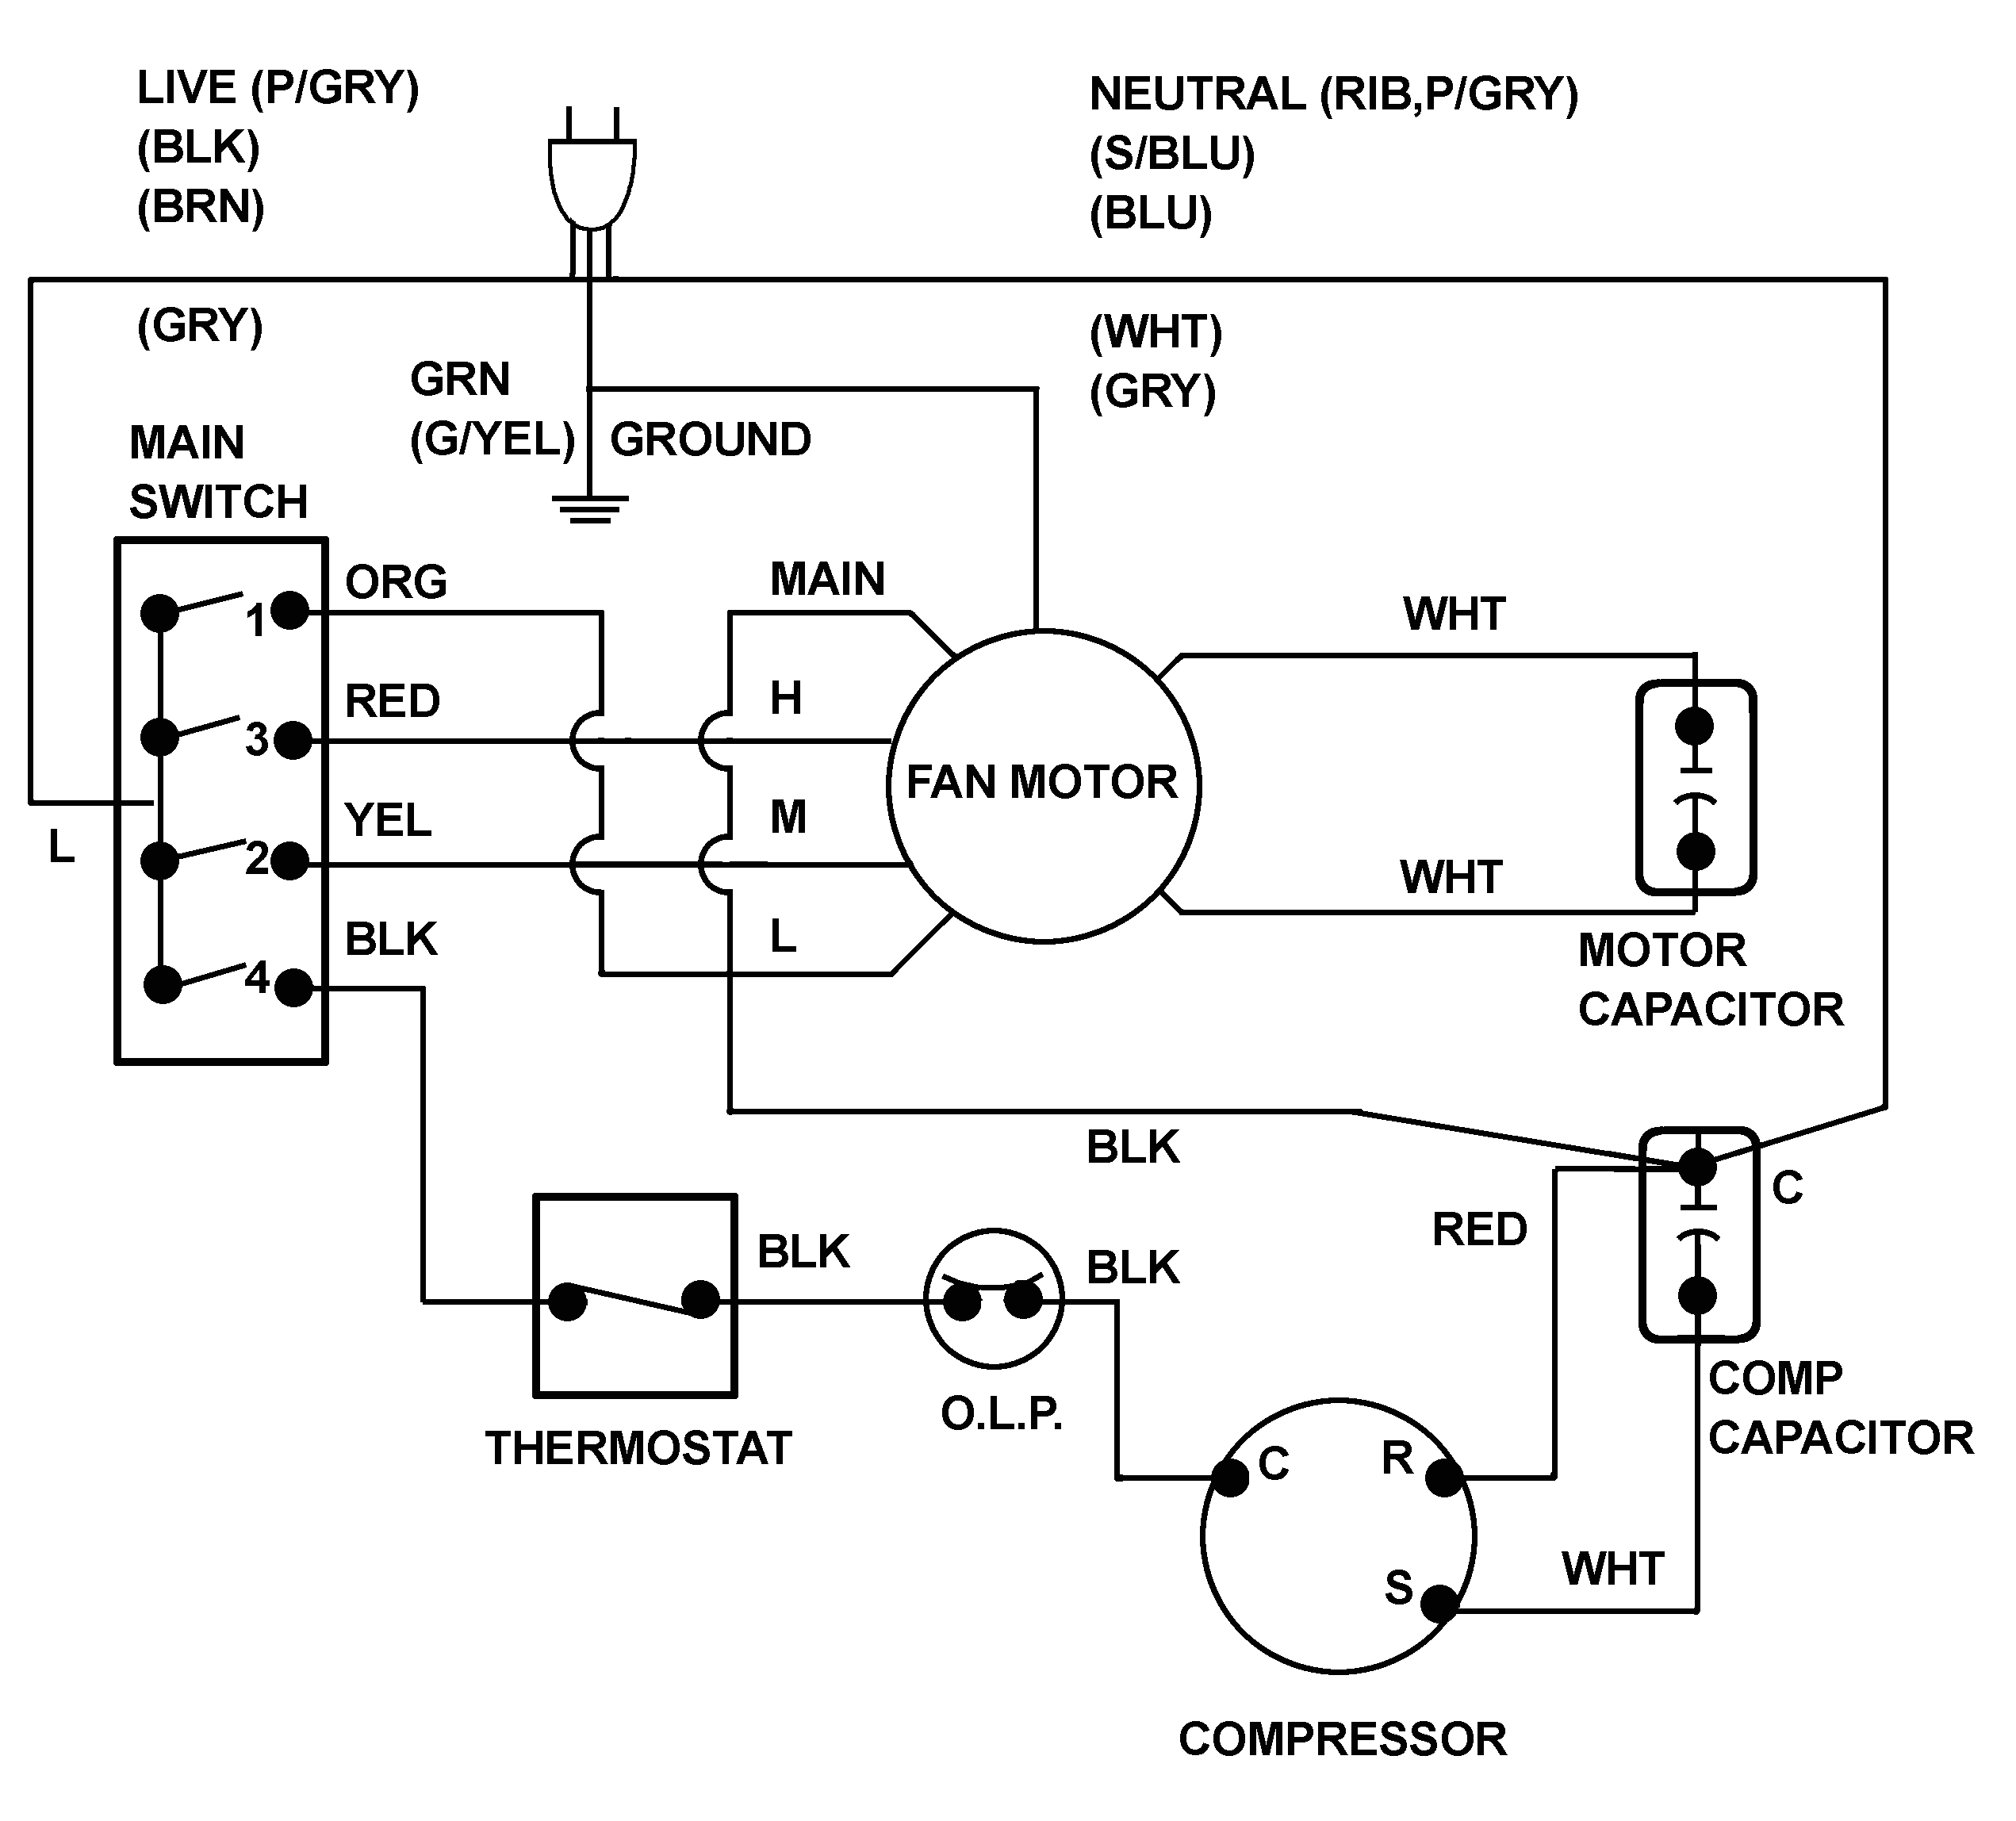 ac unit wiring ladder diagram wiring diagram article mix study guide for ac unit wiring diagram